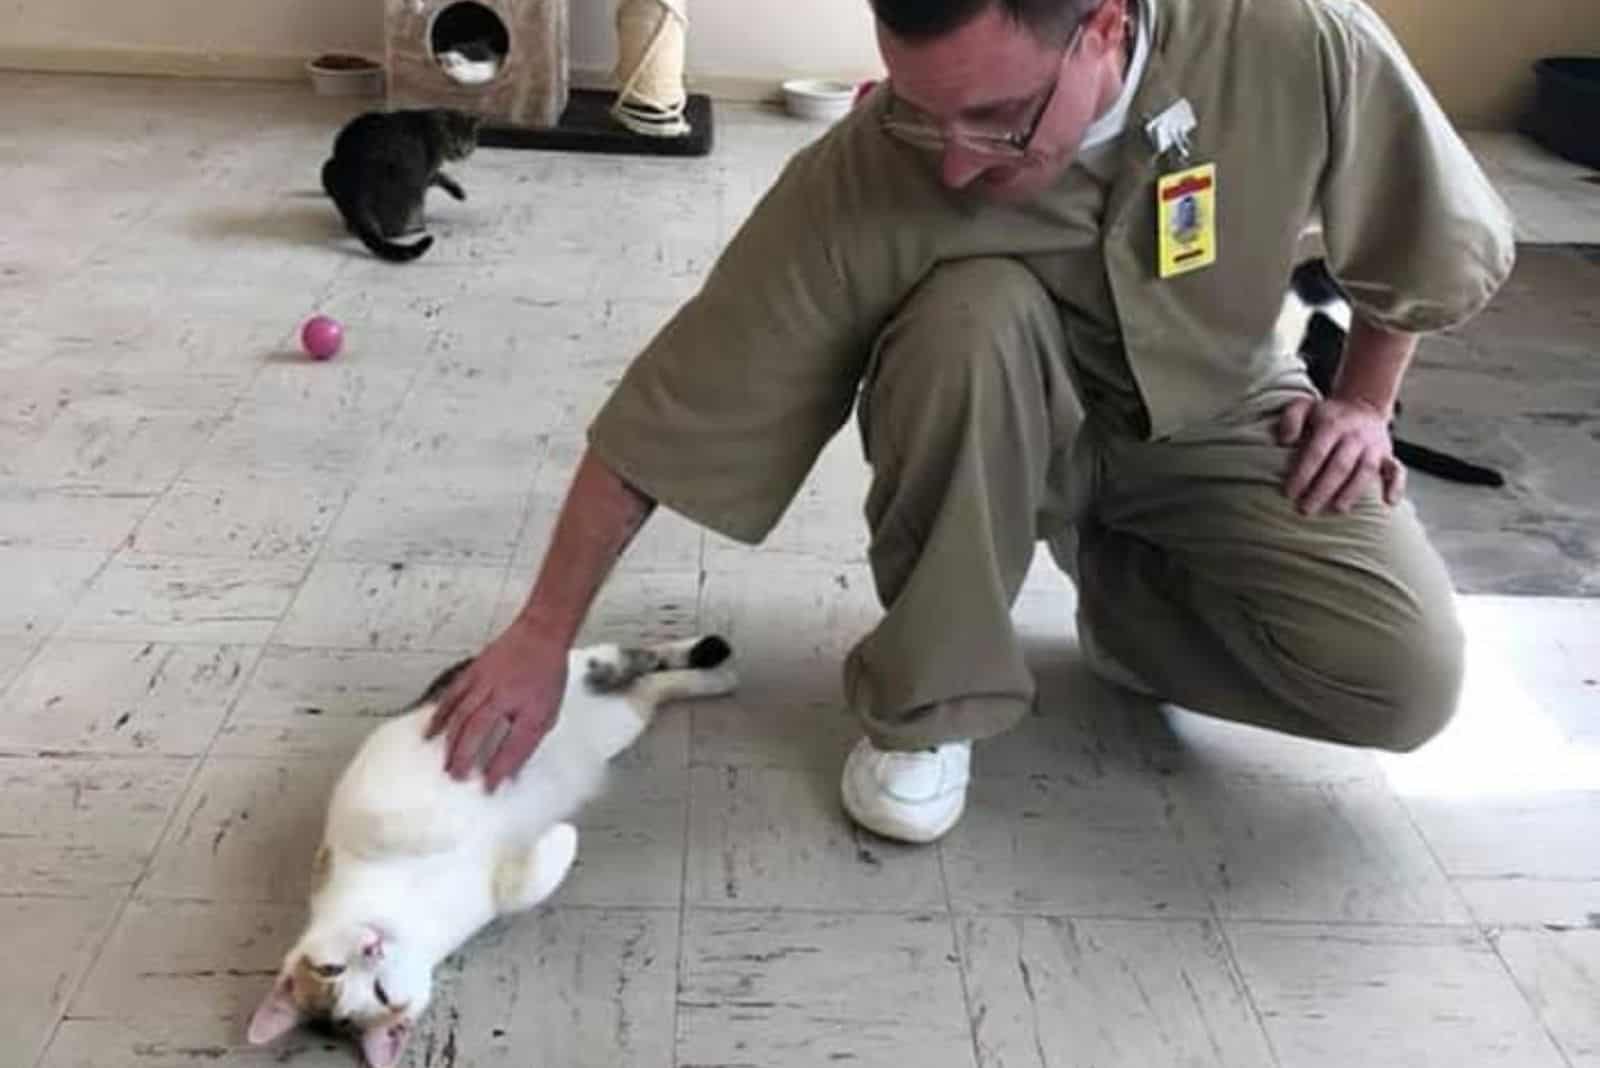 Guy petting cat on the floor